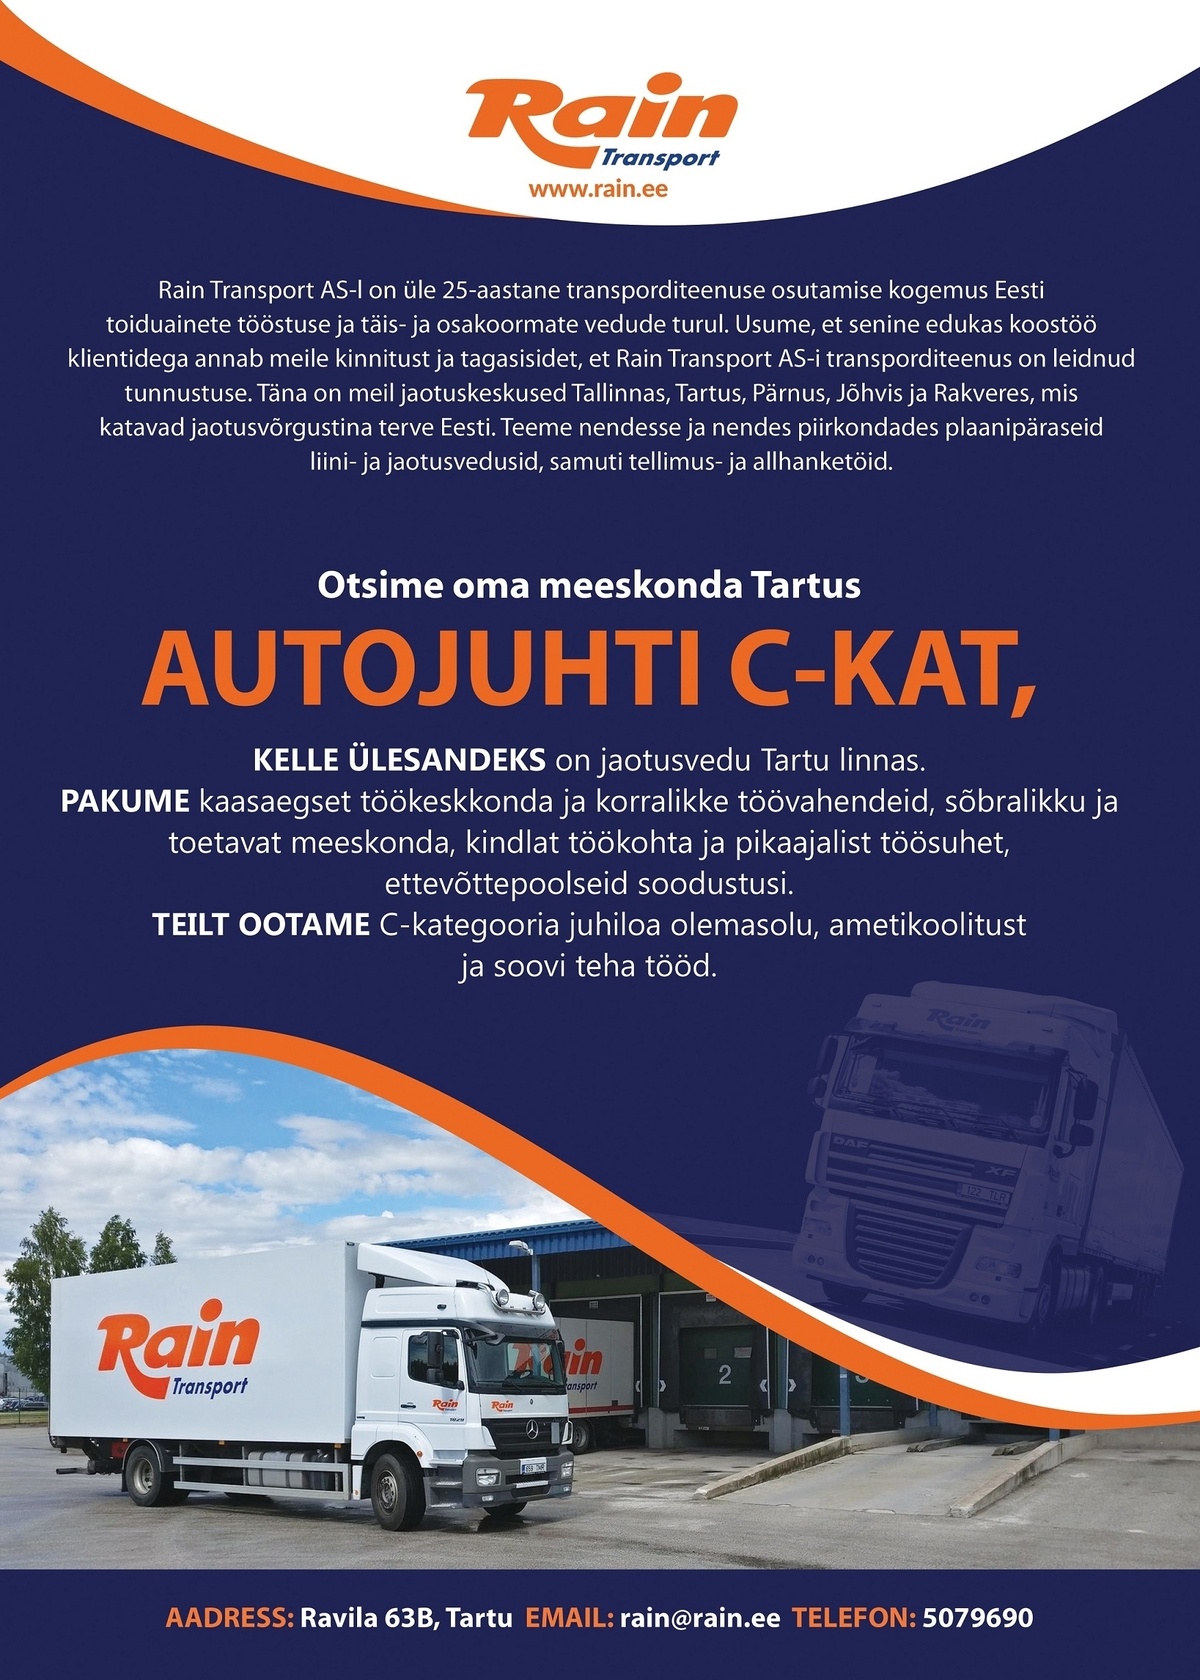 Rain Transport AS Autojuht C-kat